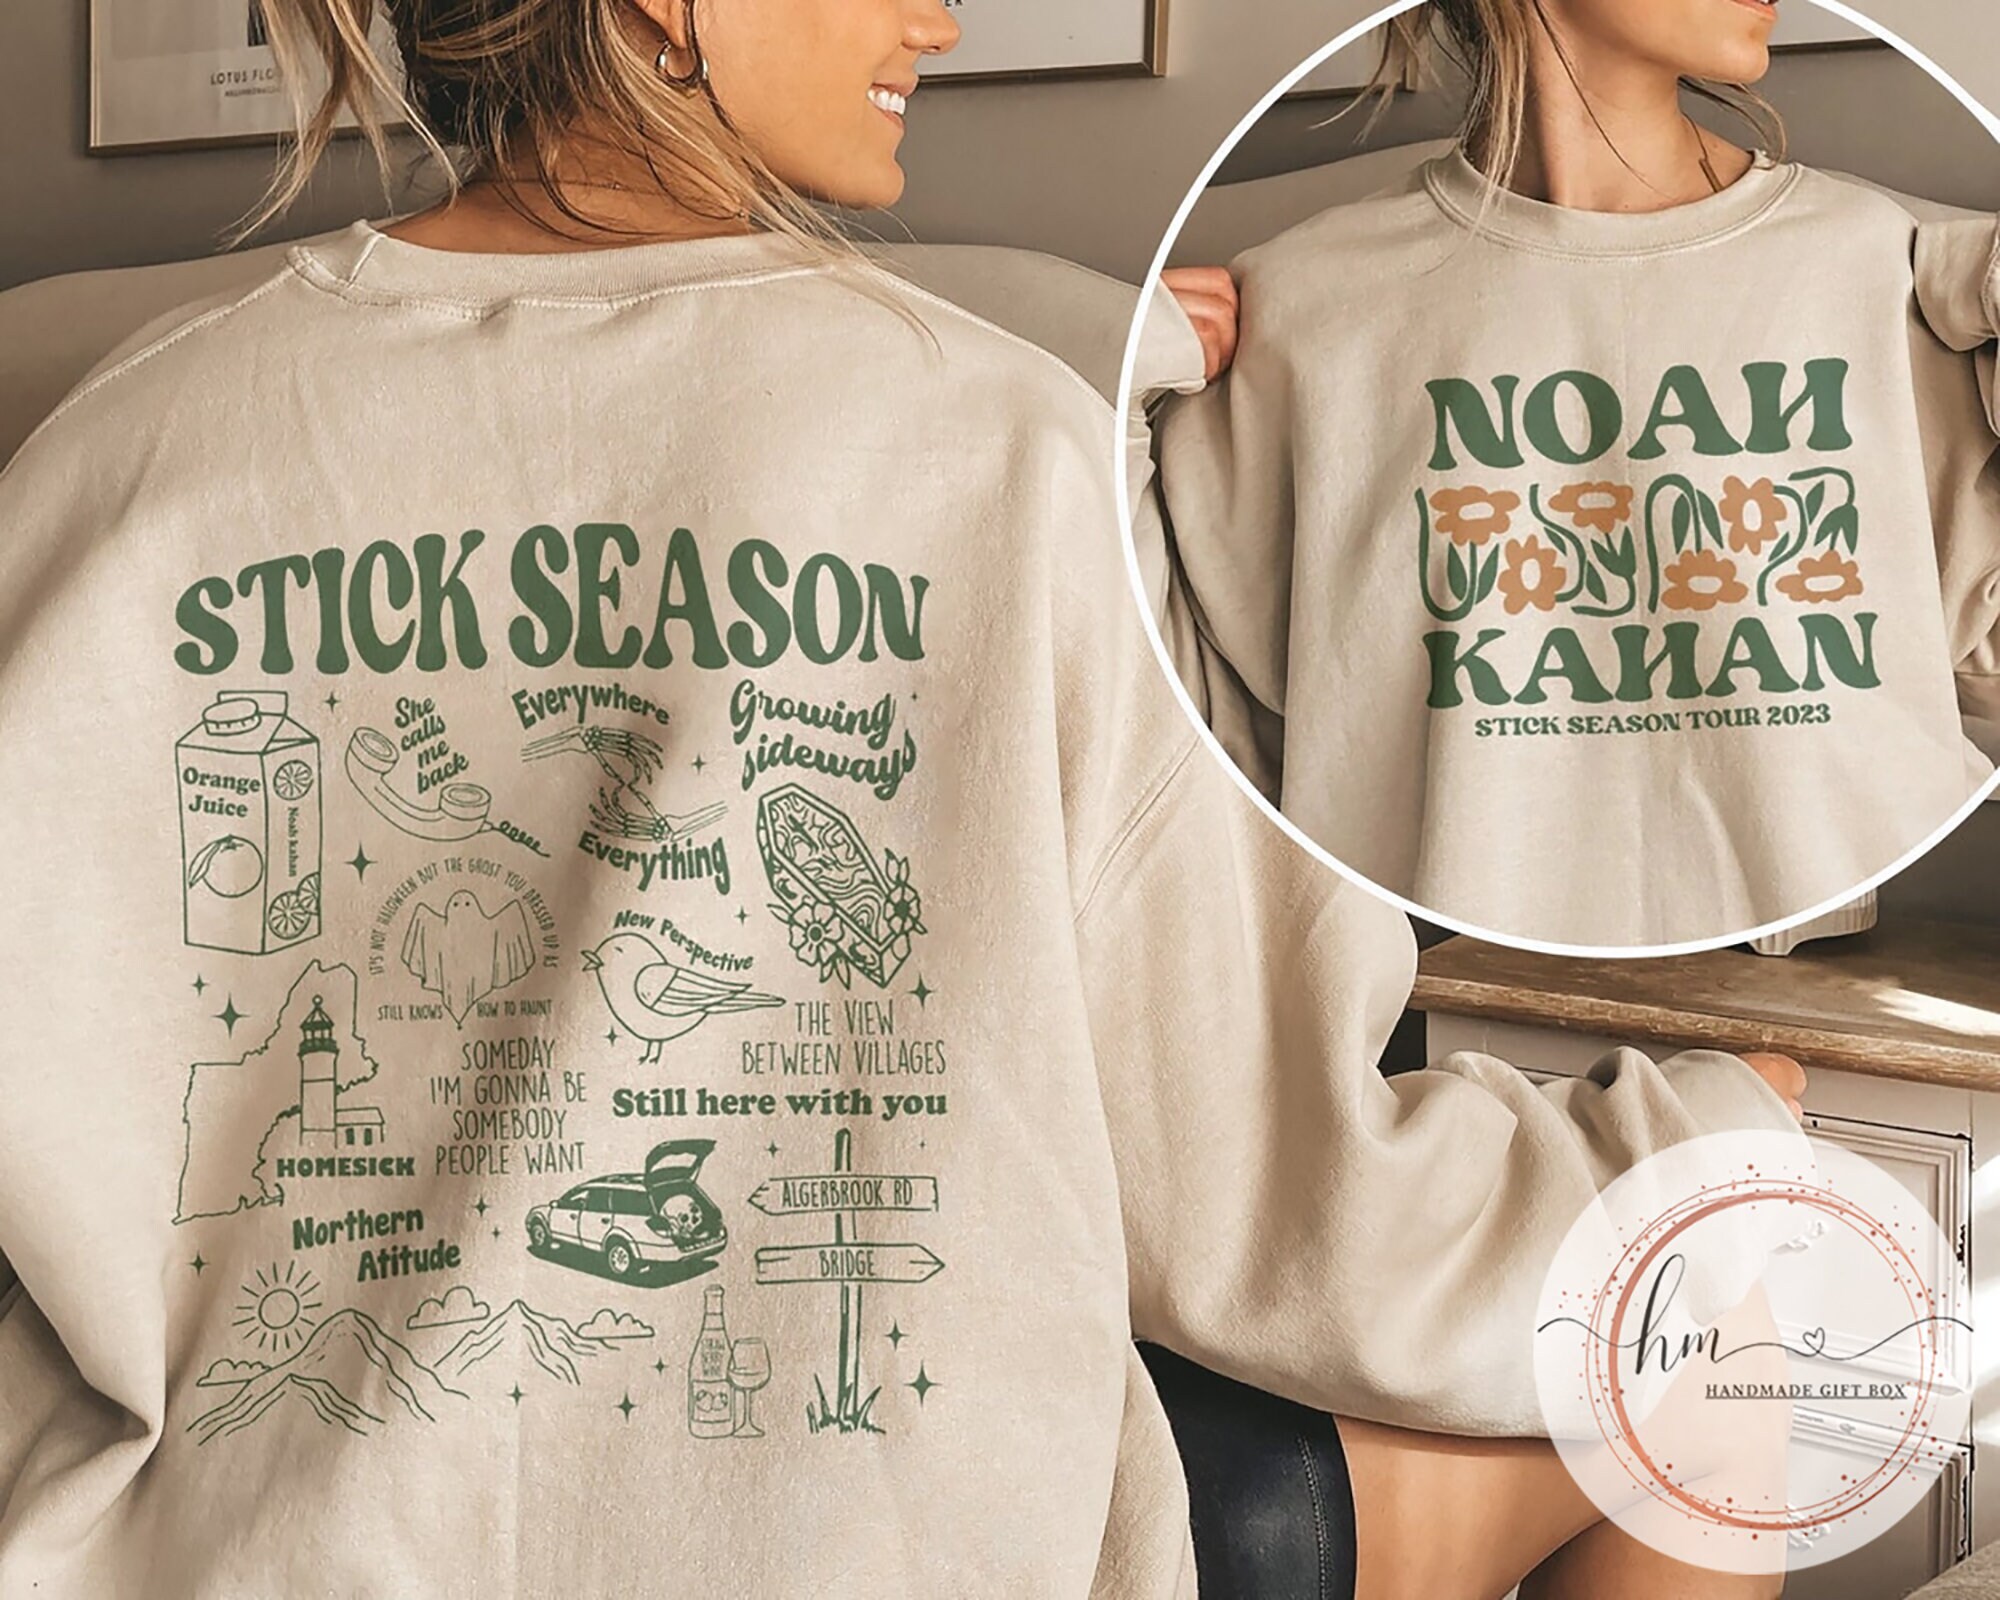 Vintage Stick Season 2023 Sweatshirt, Retro Noah Kahan Tour 2023 Shirt